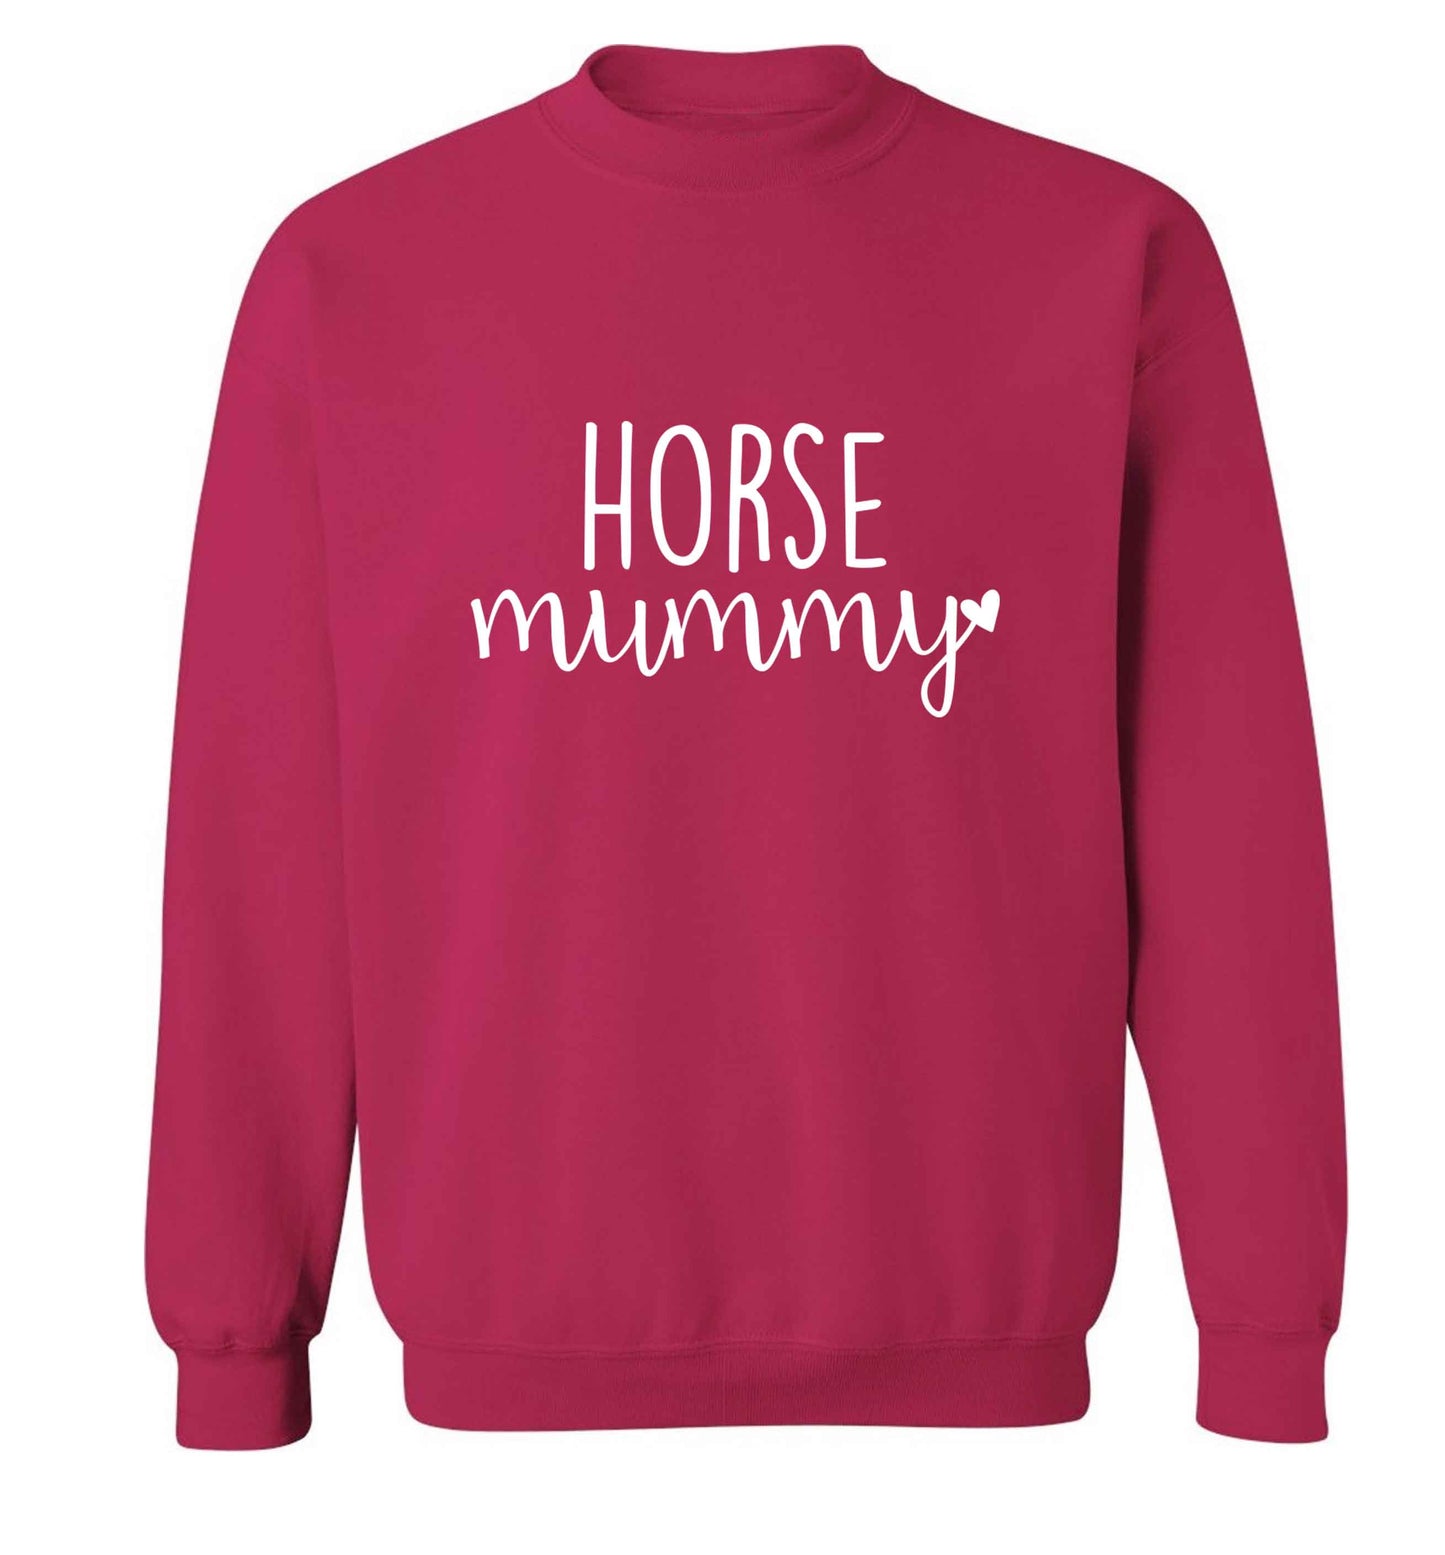 Horse mummy adult's unisex pink sweater 2XL